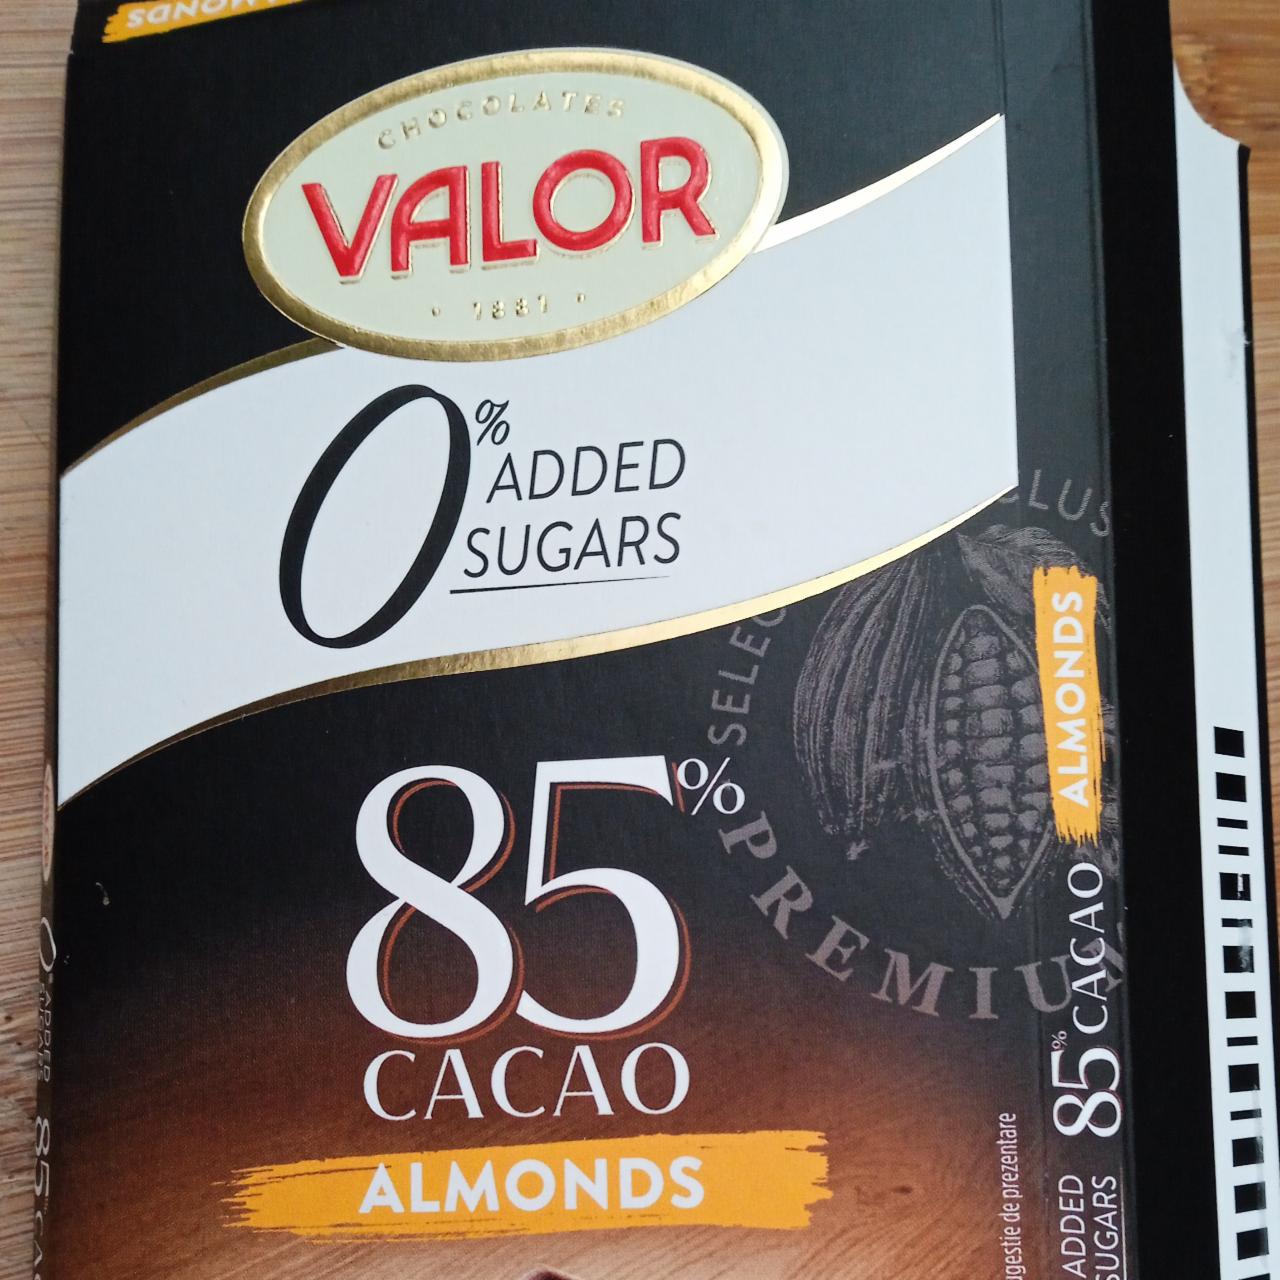 Fotografie - 85% Cacao Almonds 0% Added sugars Valor